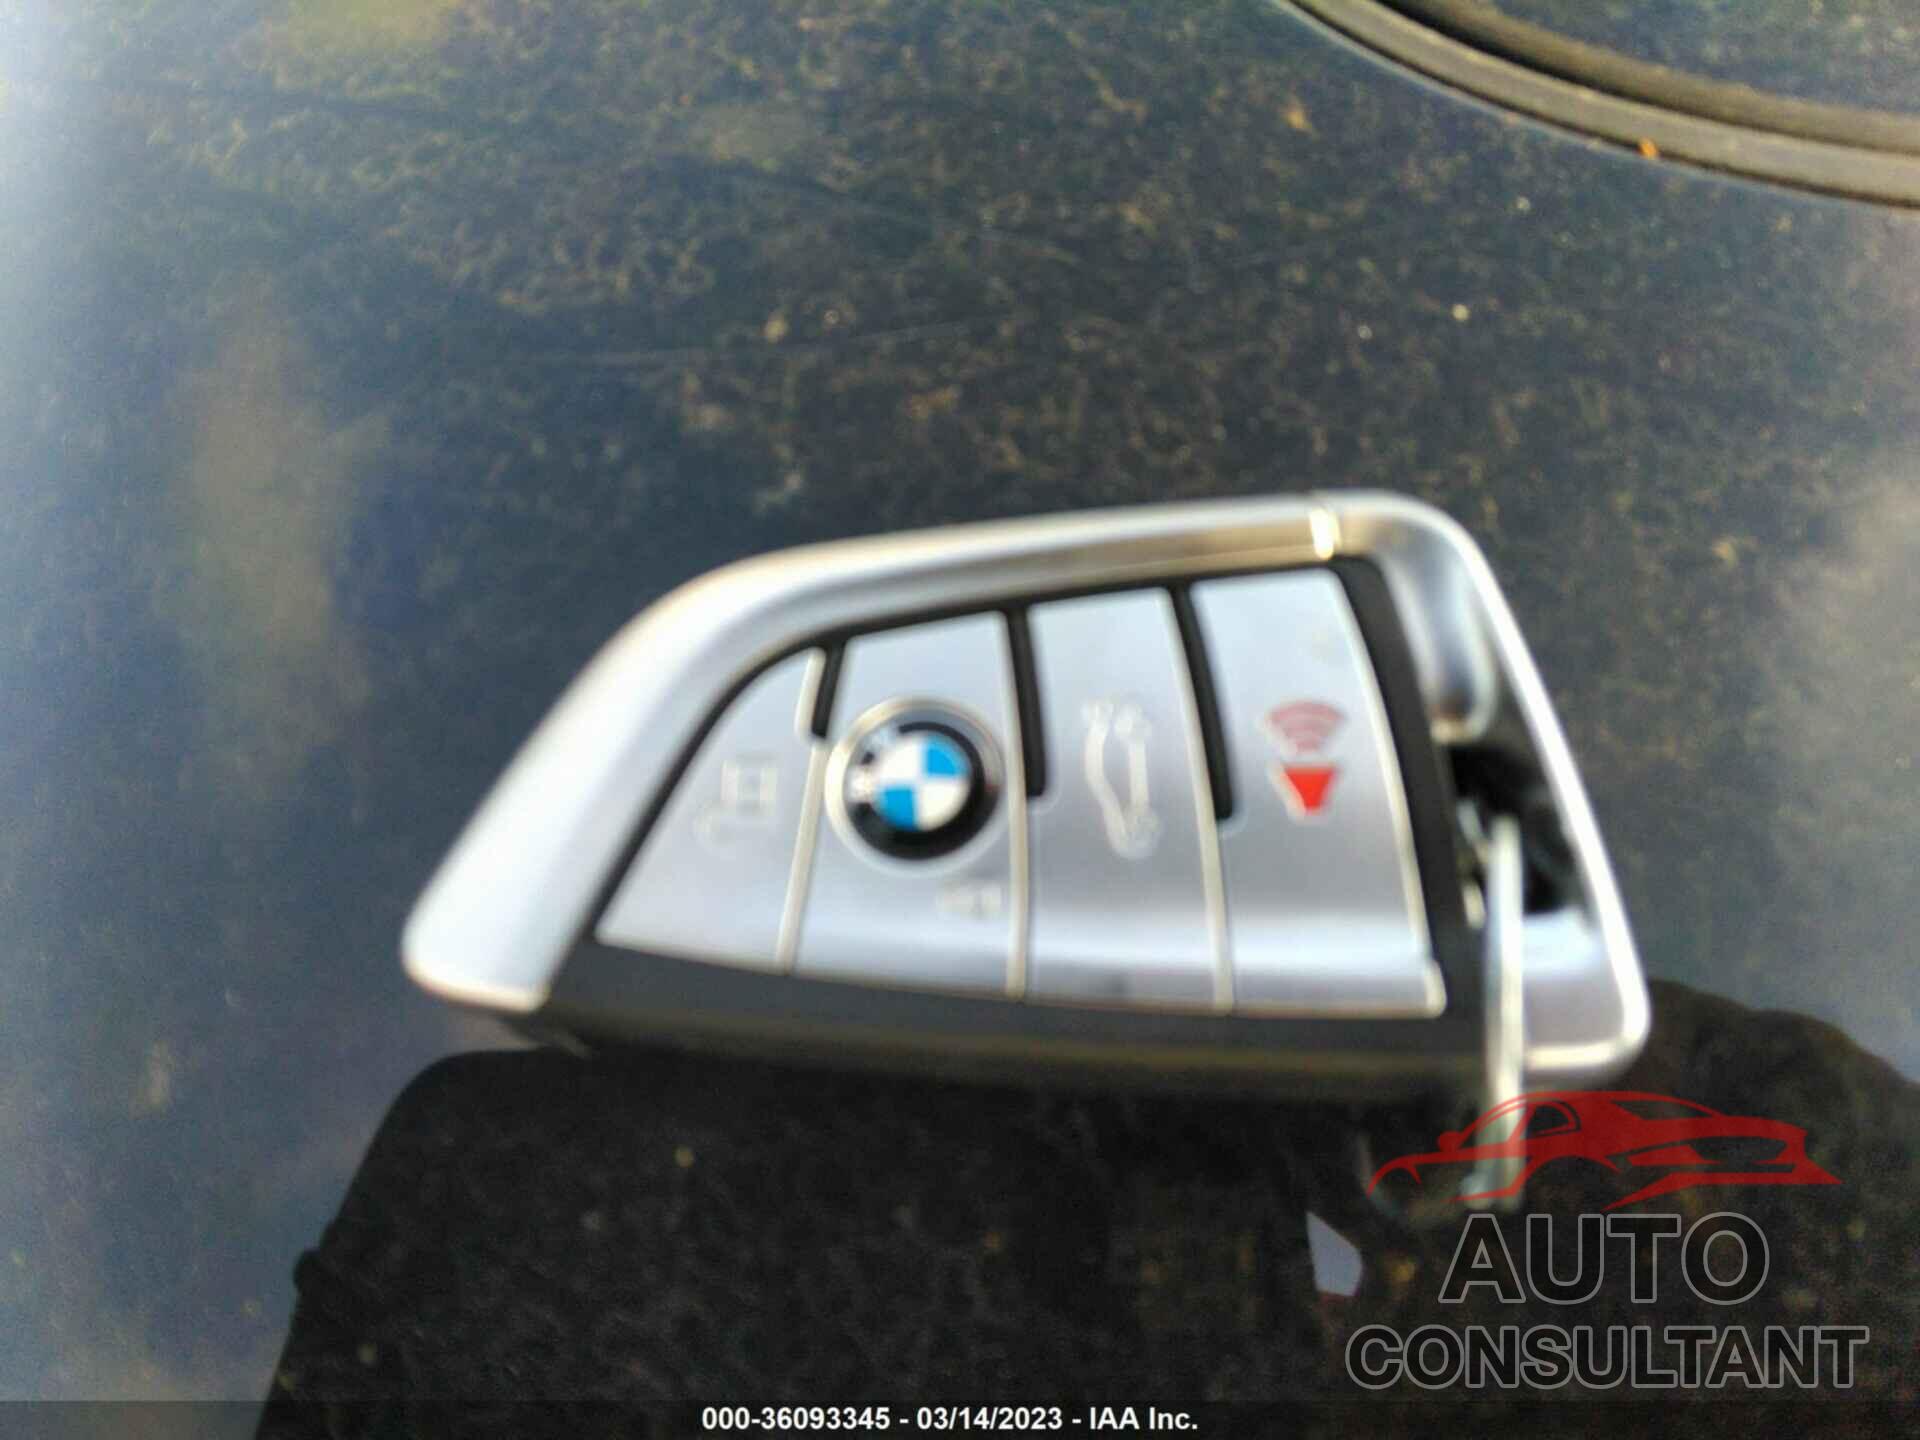 BMW 7 SERIES 2022 - WBA7T2C0XNCJ55350